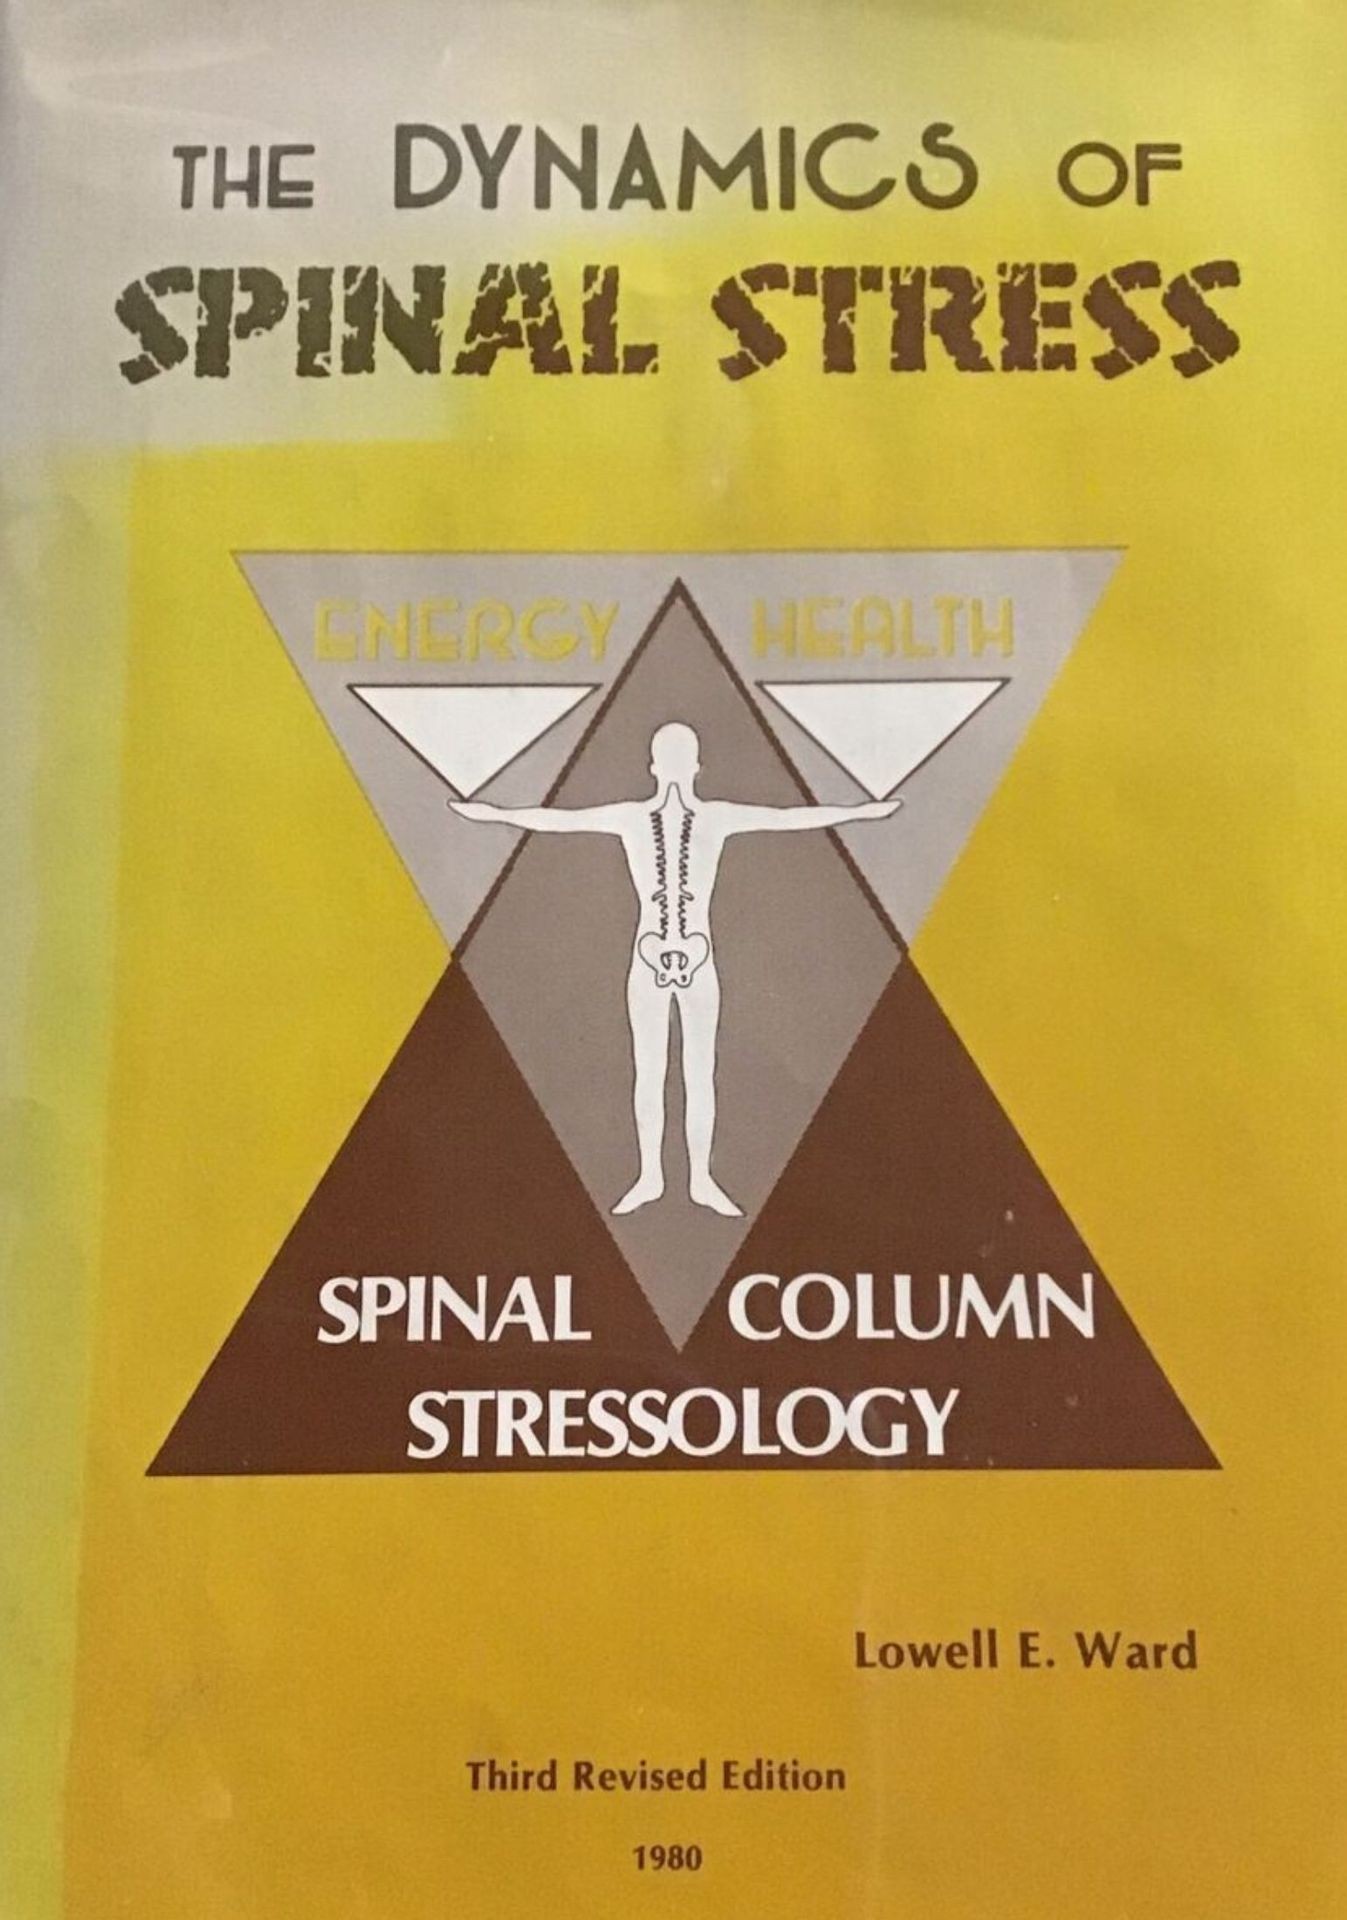 Spinal Stressology